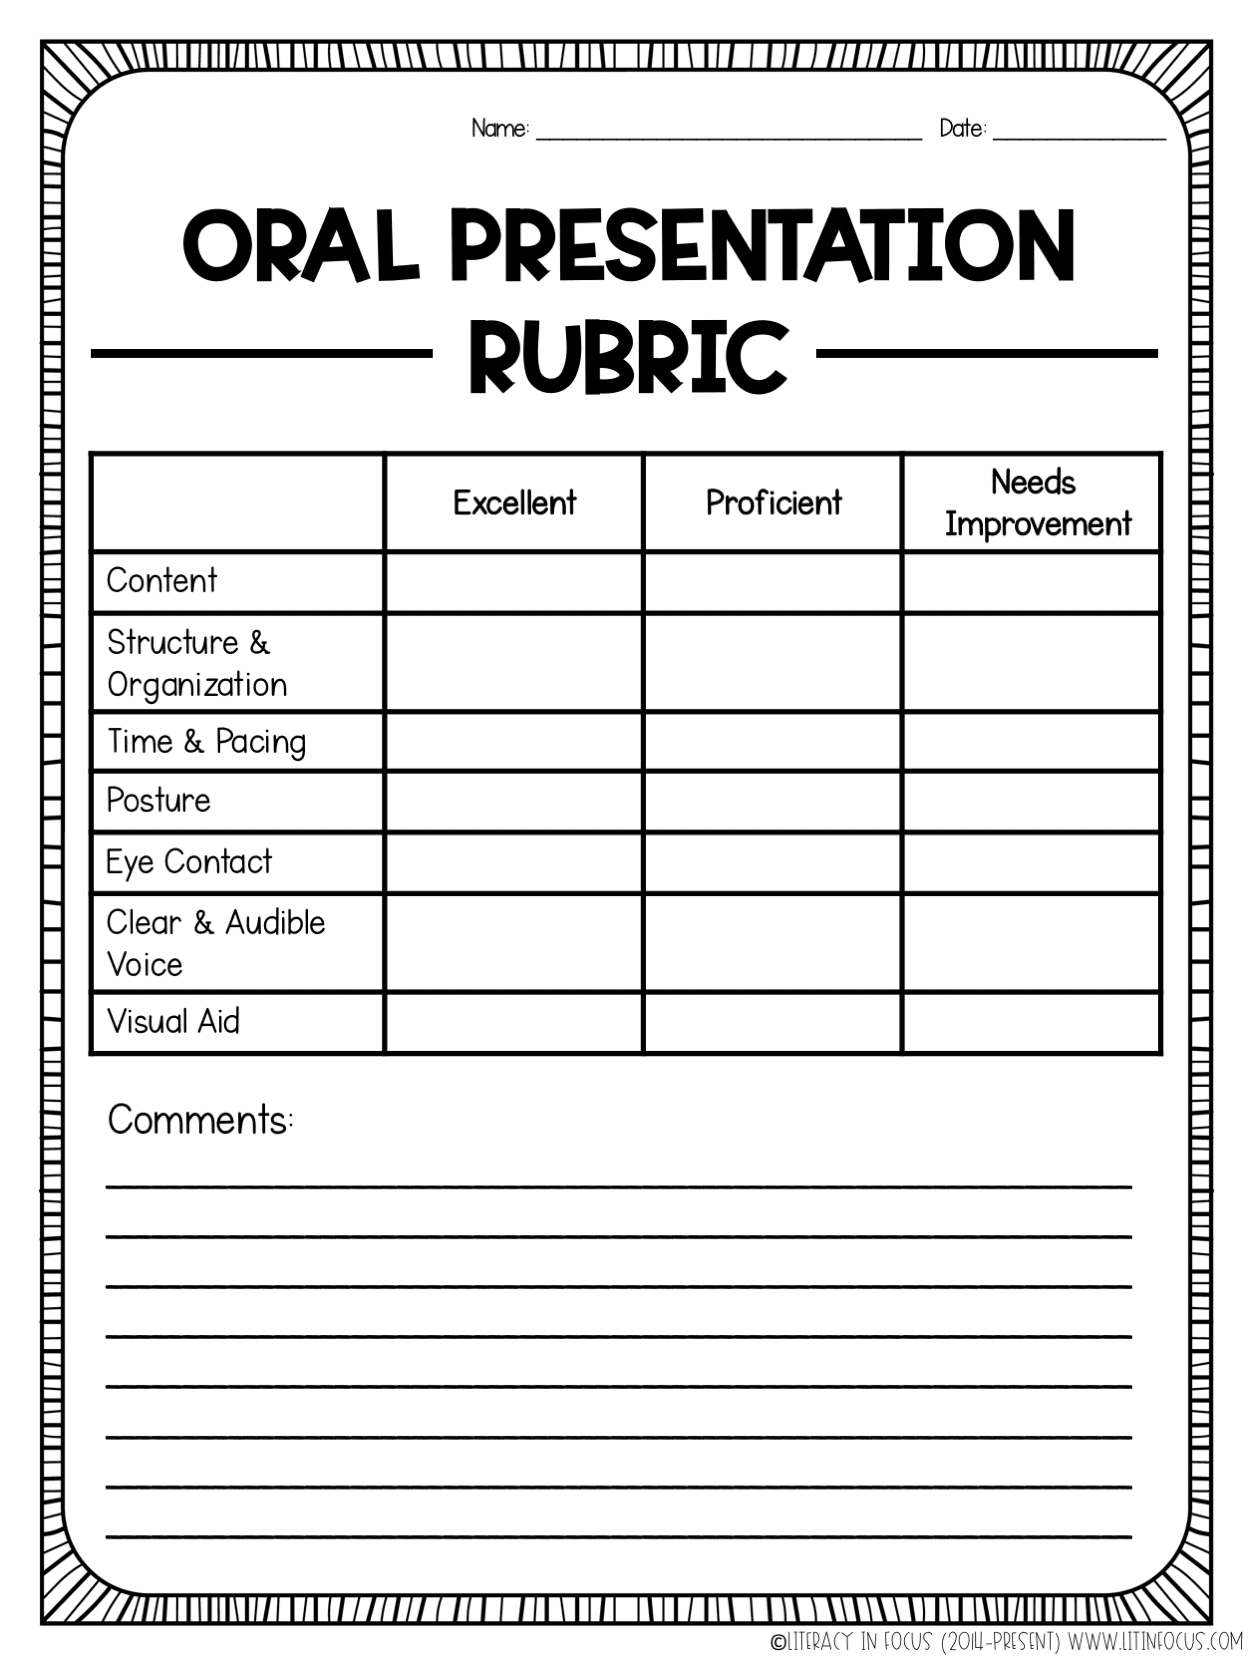 oral presentation rubric